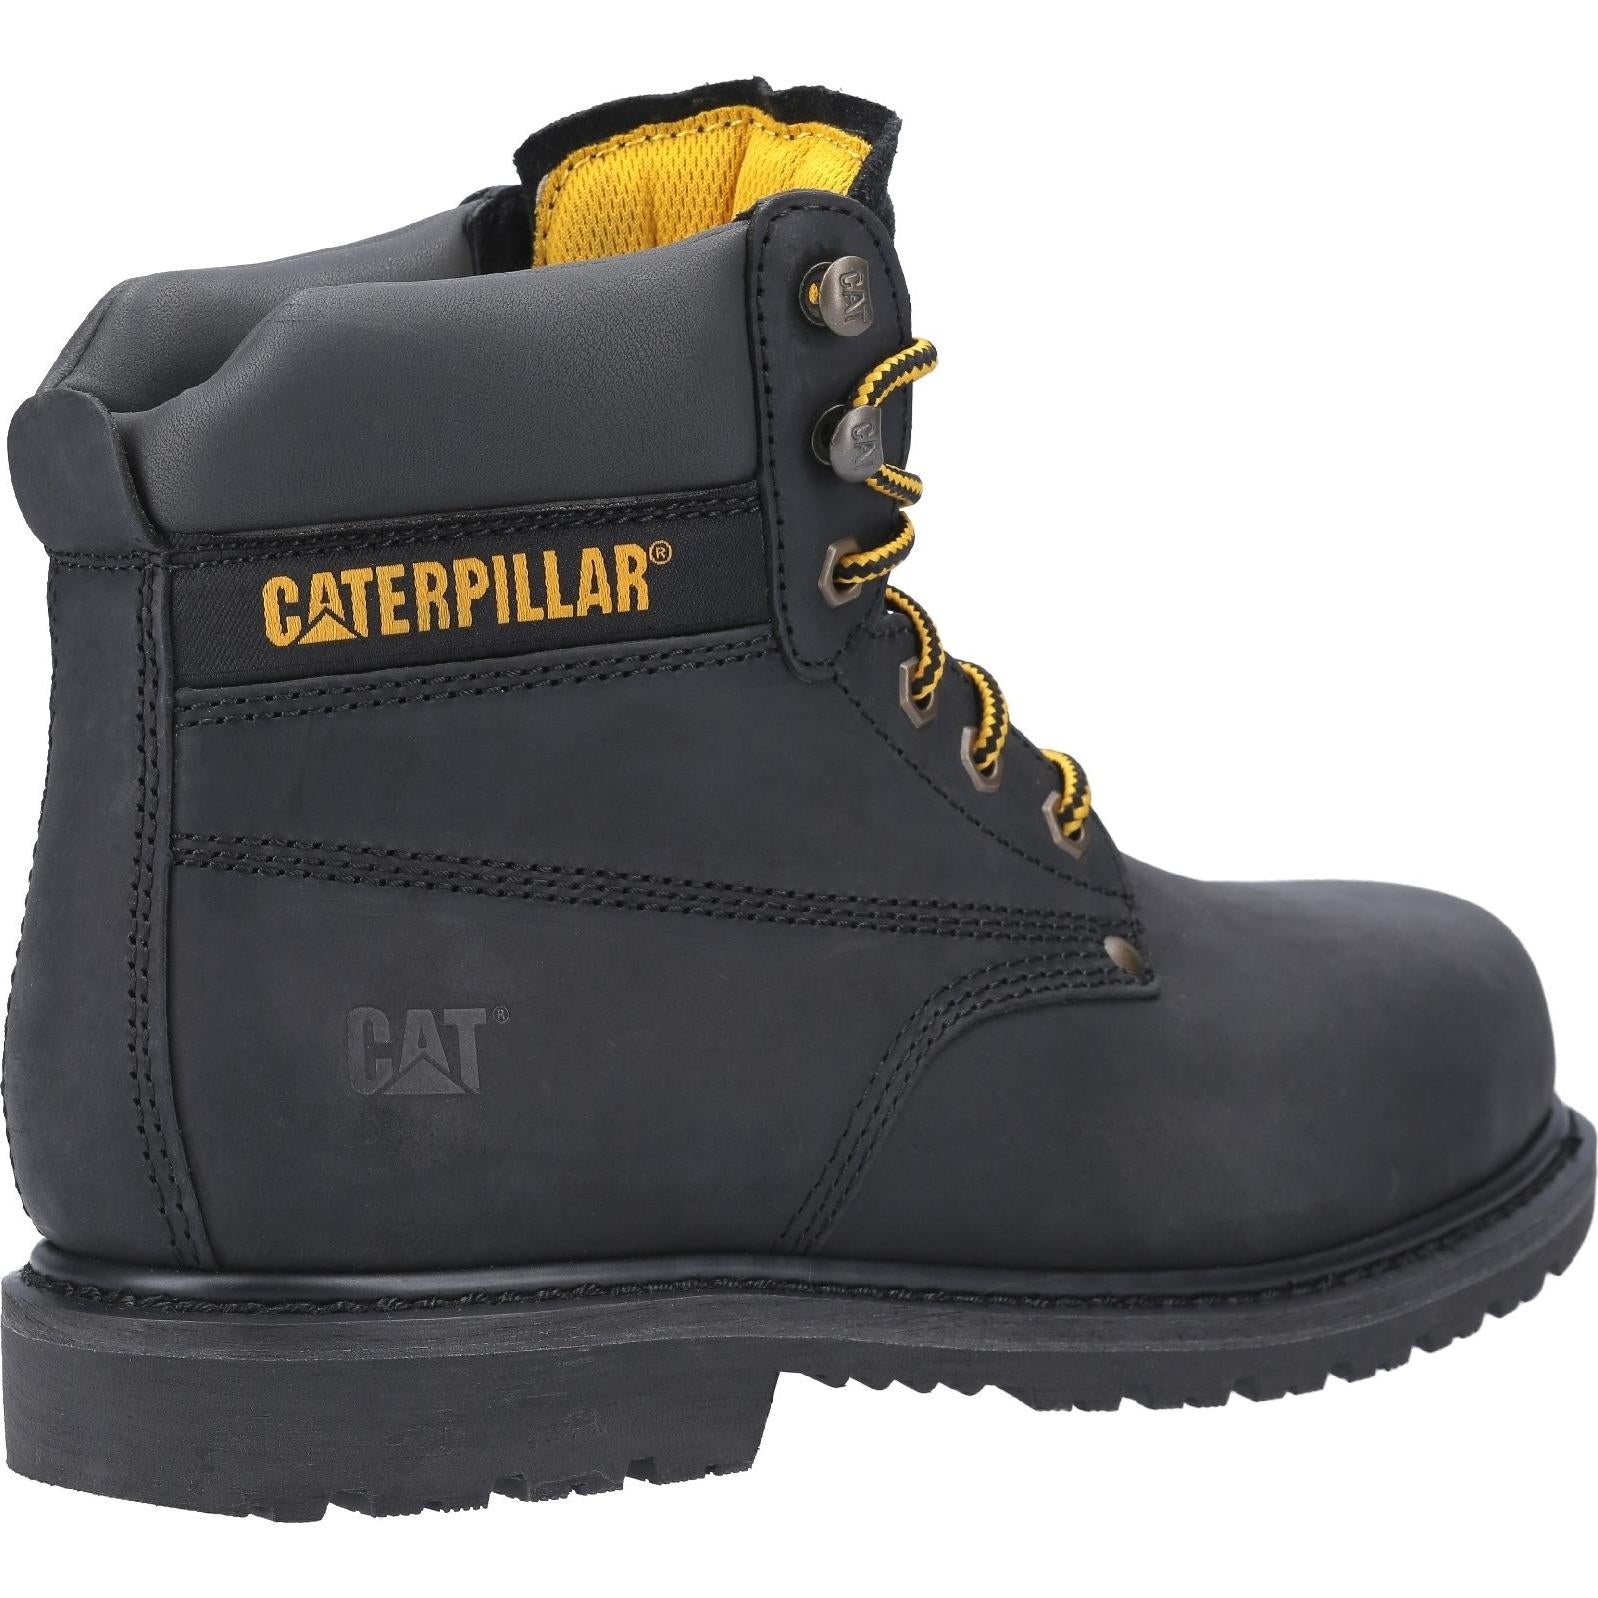 Caterpillar Powerplant GYW Safety Boot